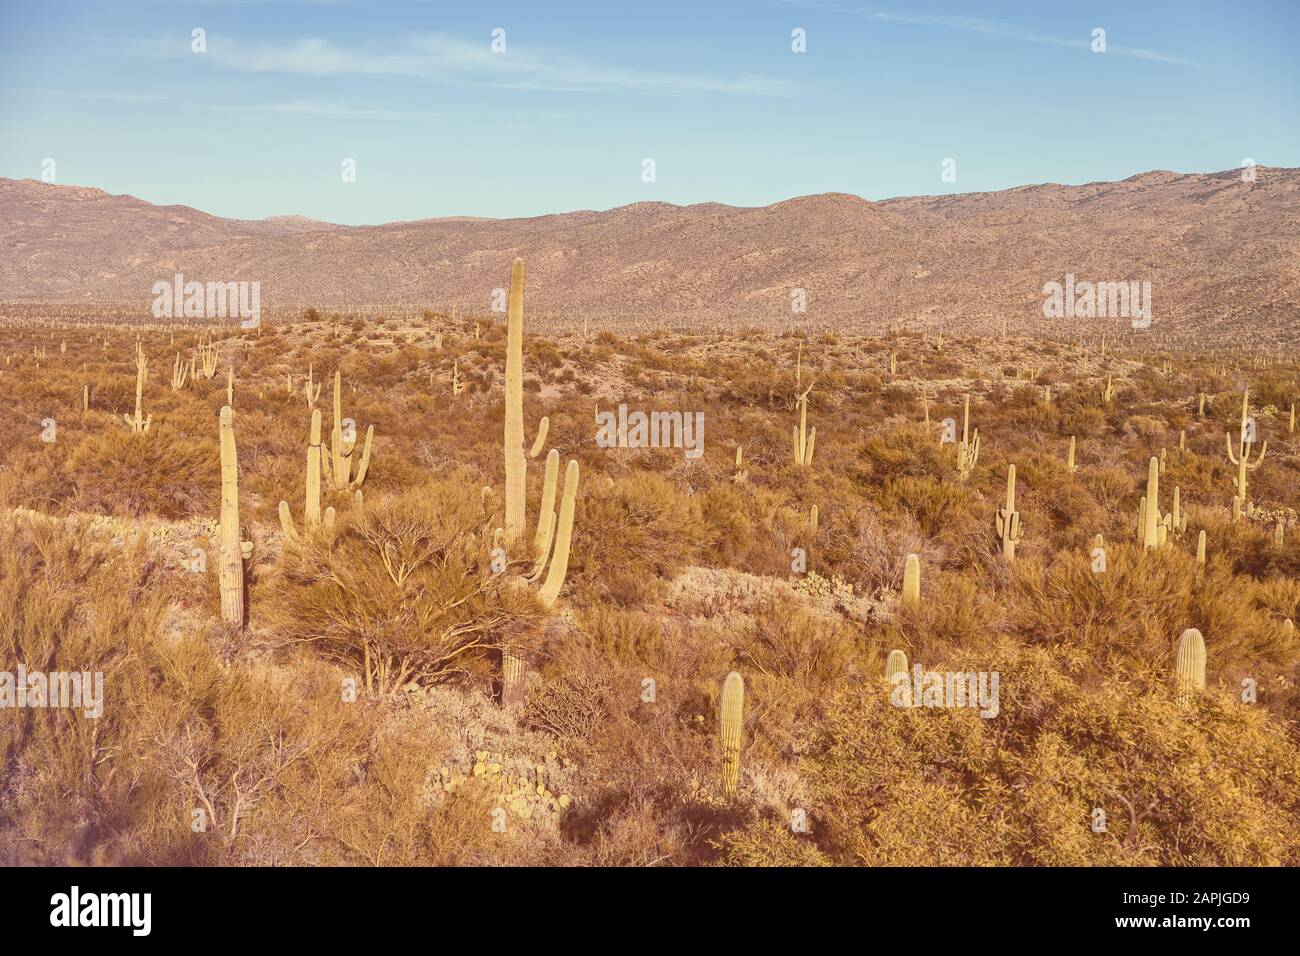 Saguaro-Kakteen (Carnegiea gigantea) und umliegende Pflanzen im Saguaro-Wald, Saguaro-Nationalpark, Arizona, USA. Stockfoto